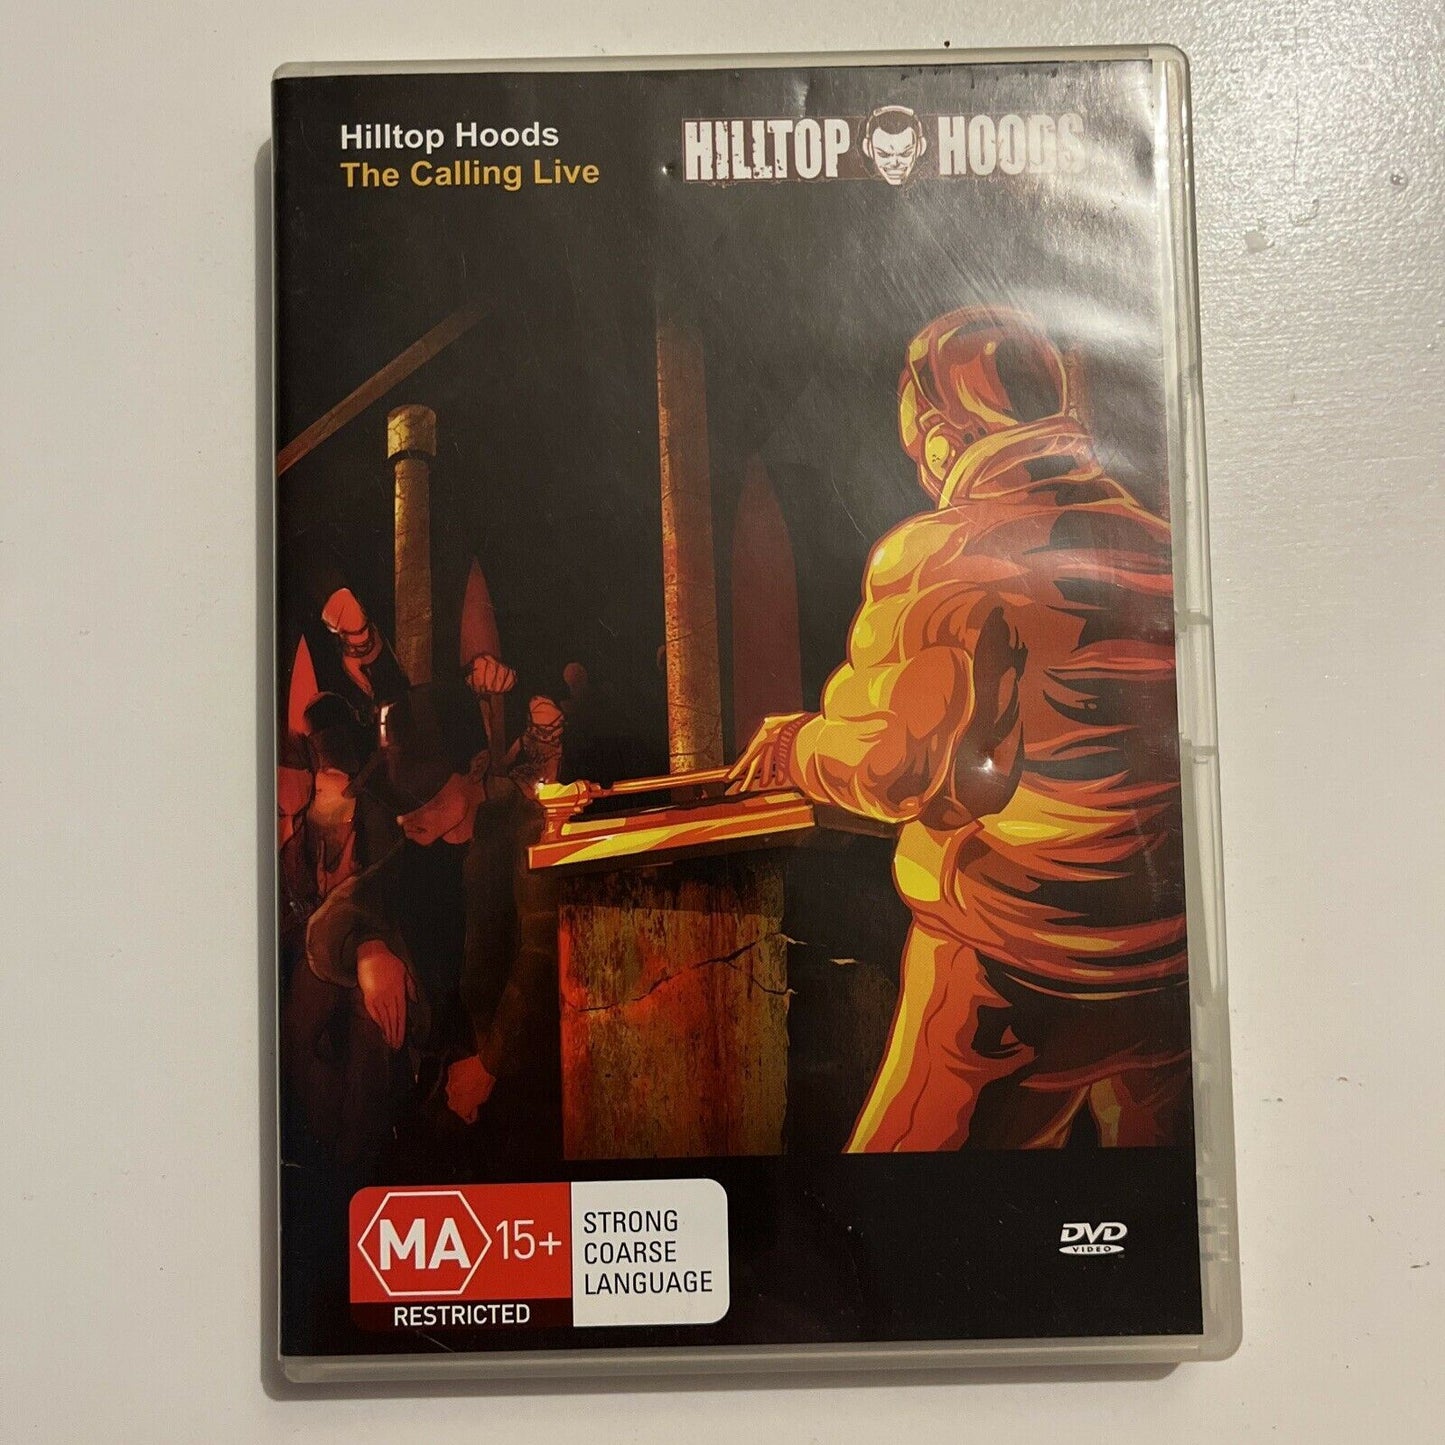 HILLTOP HOODS The Calling Live (DVD, 2005) All Regions